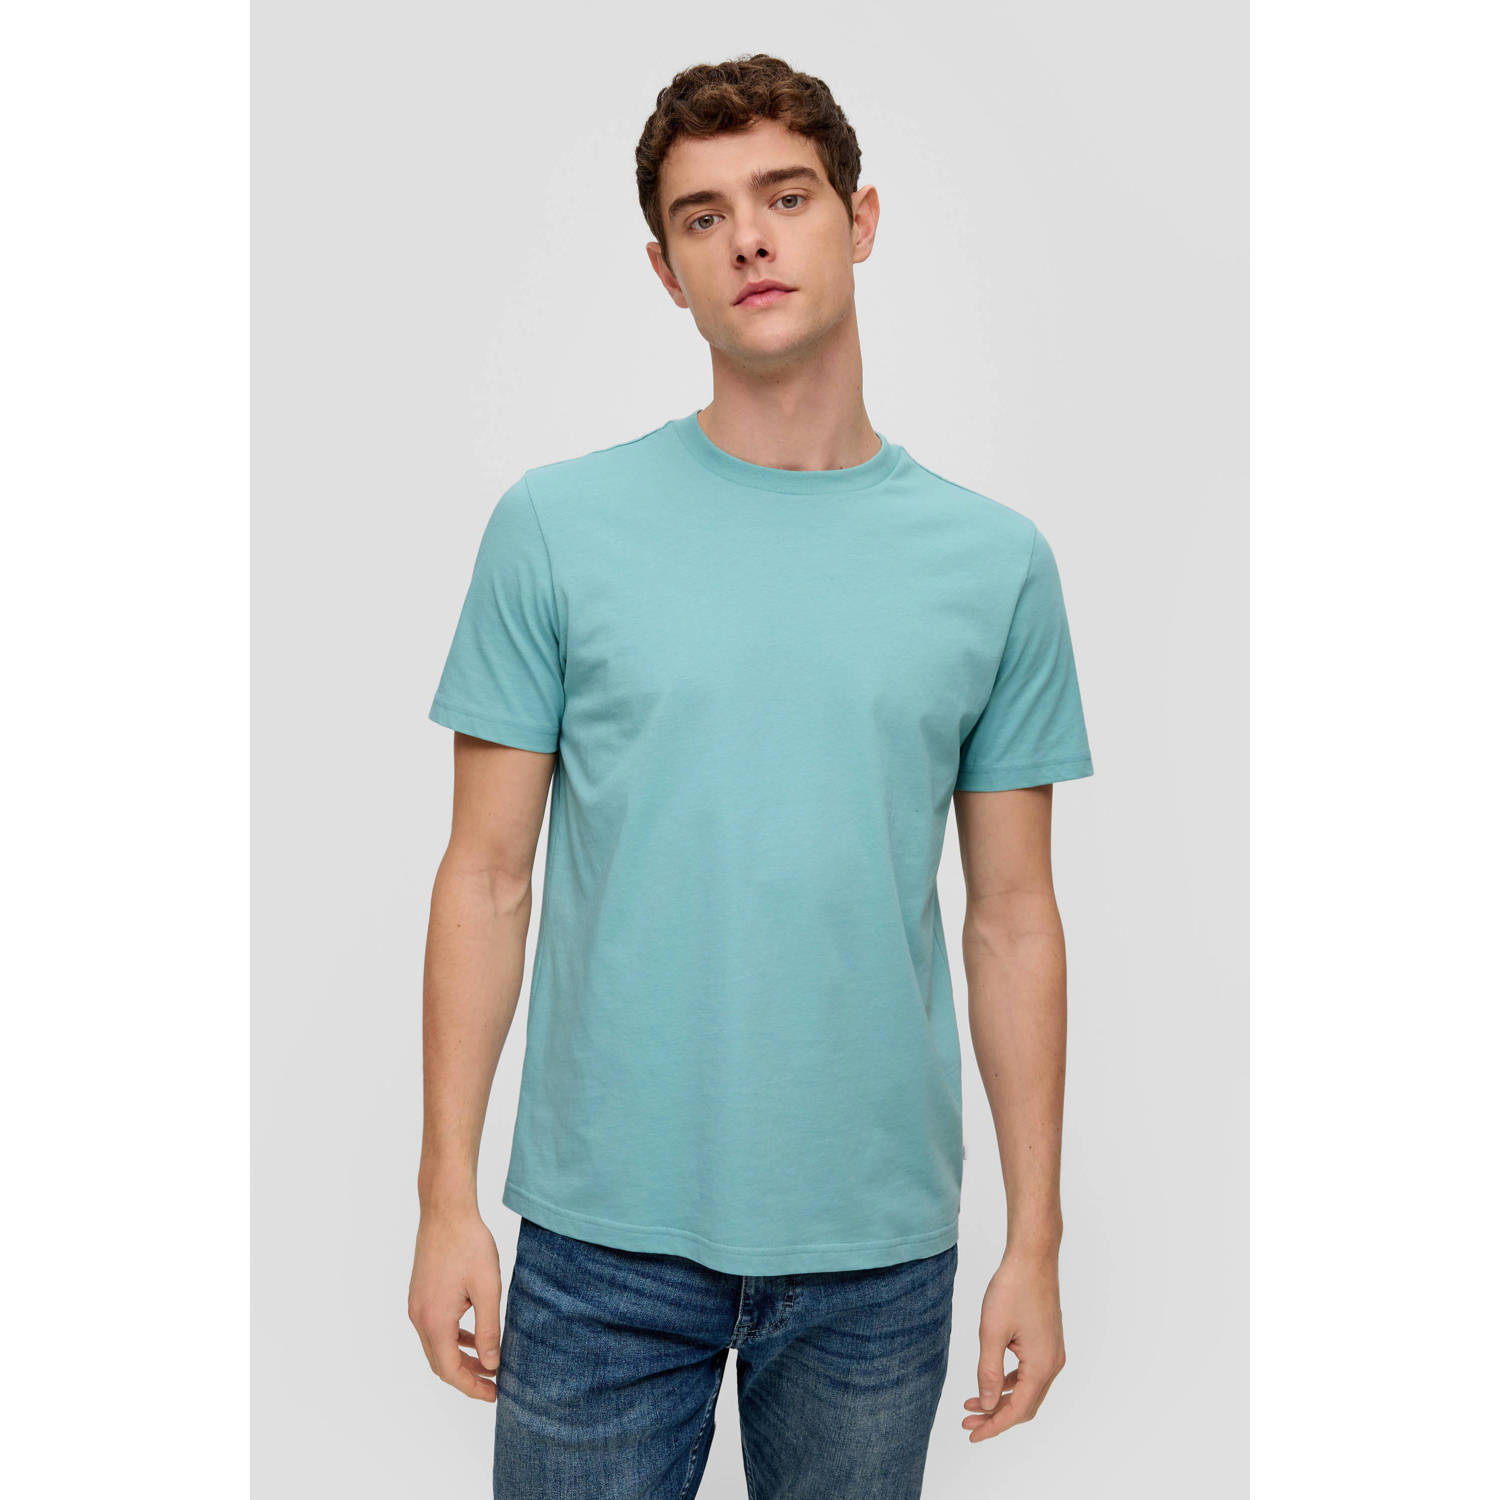 Q S by s.Oliver regular fit T-shirt lichtblauw